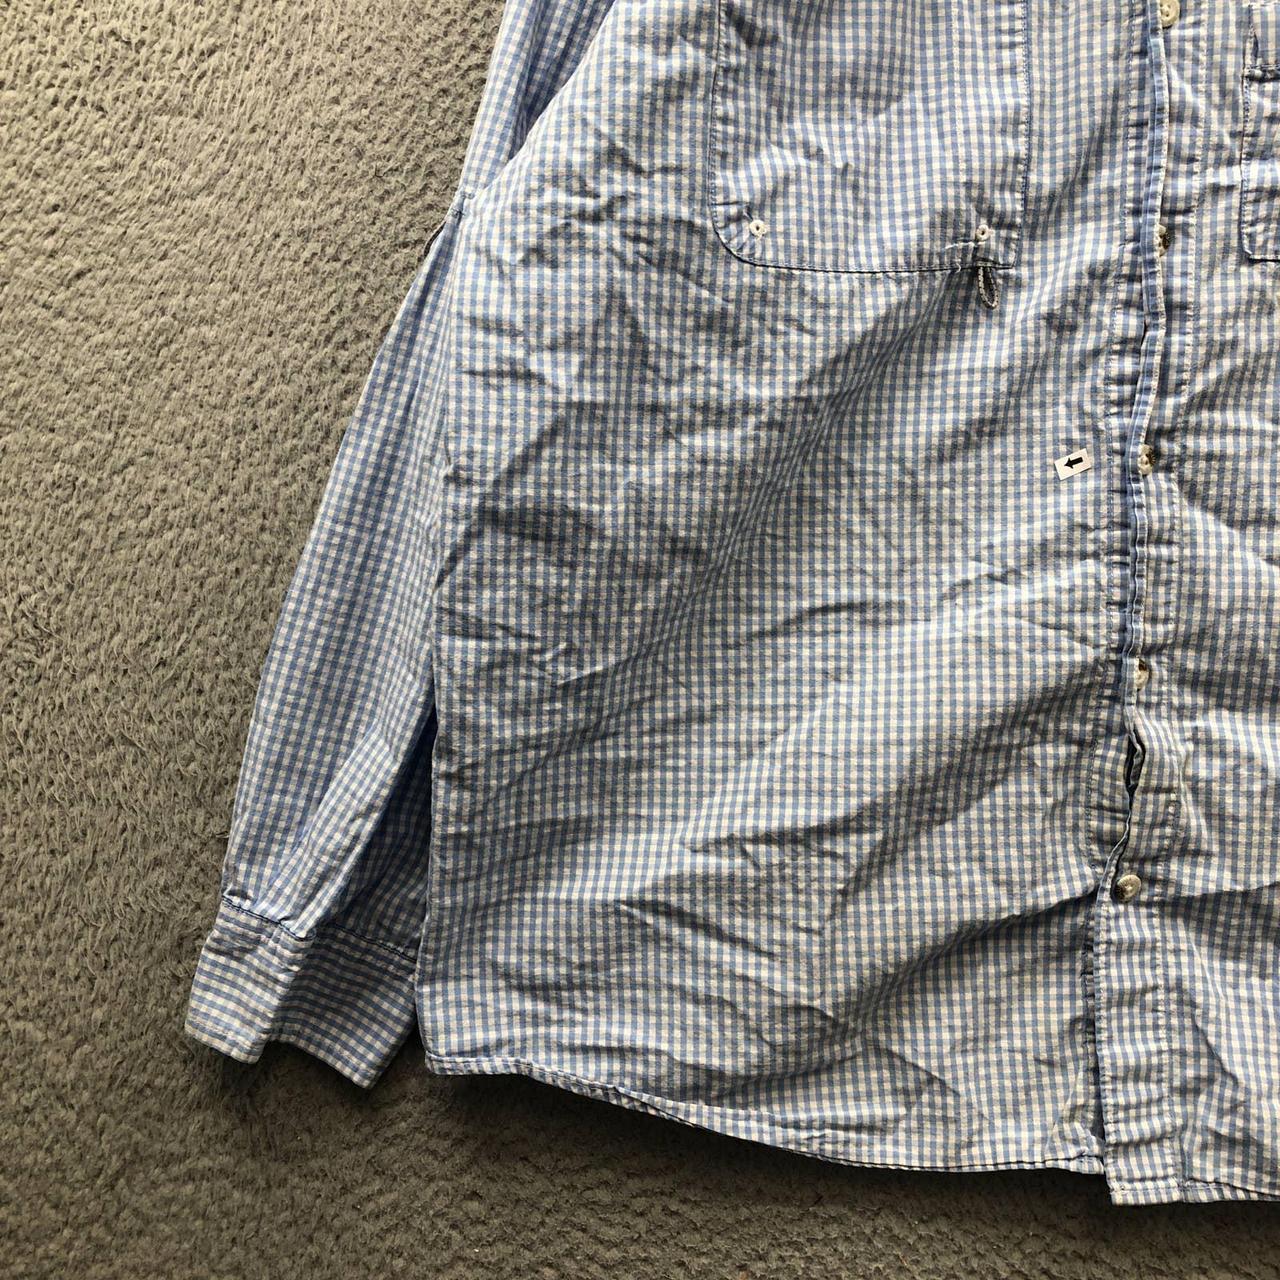 Columbia PFG Fishing Shirt Long Sleeve XL Button - Depop